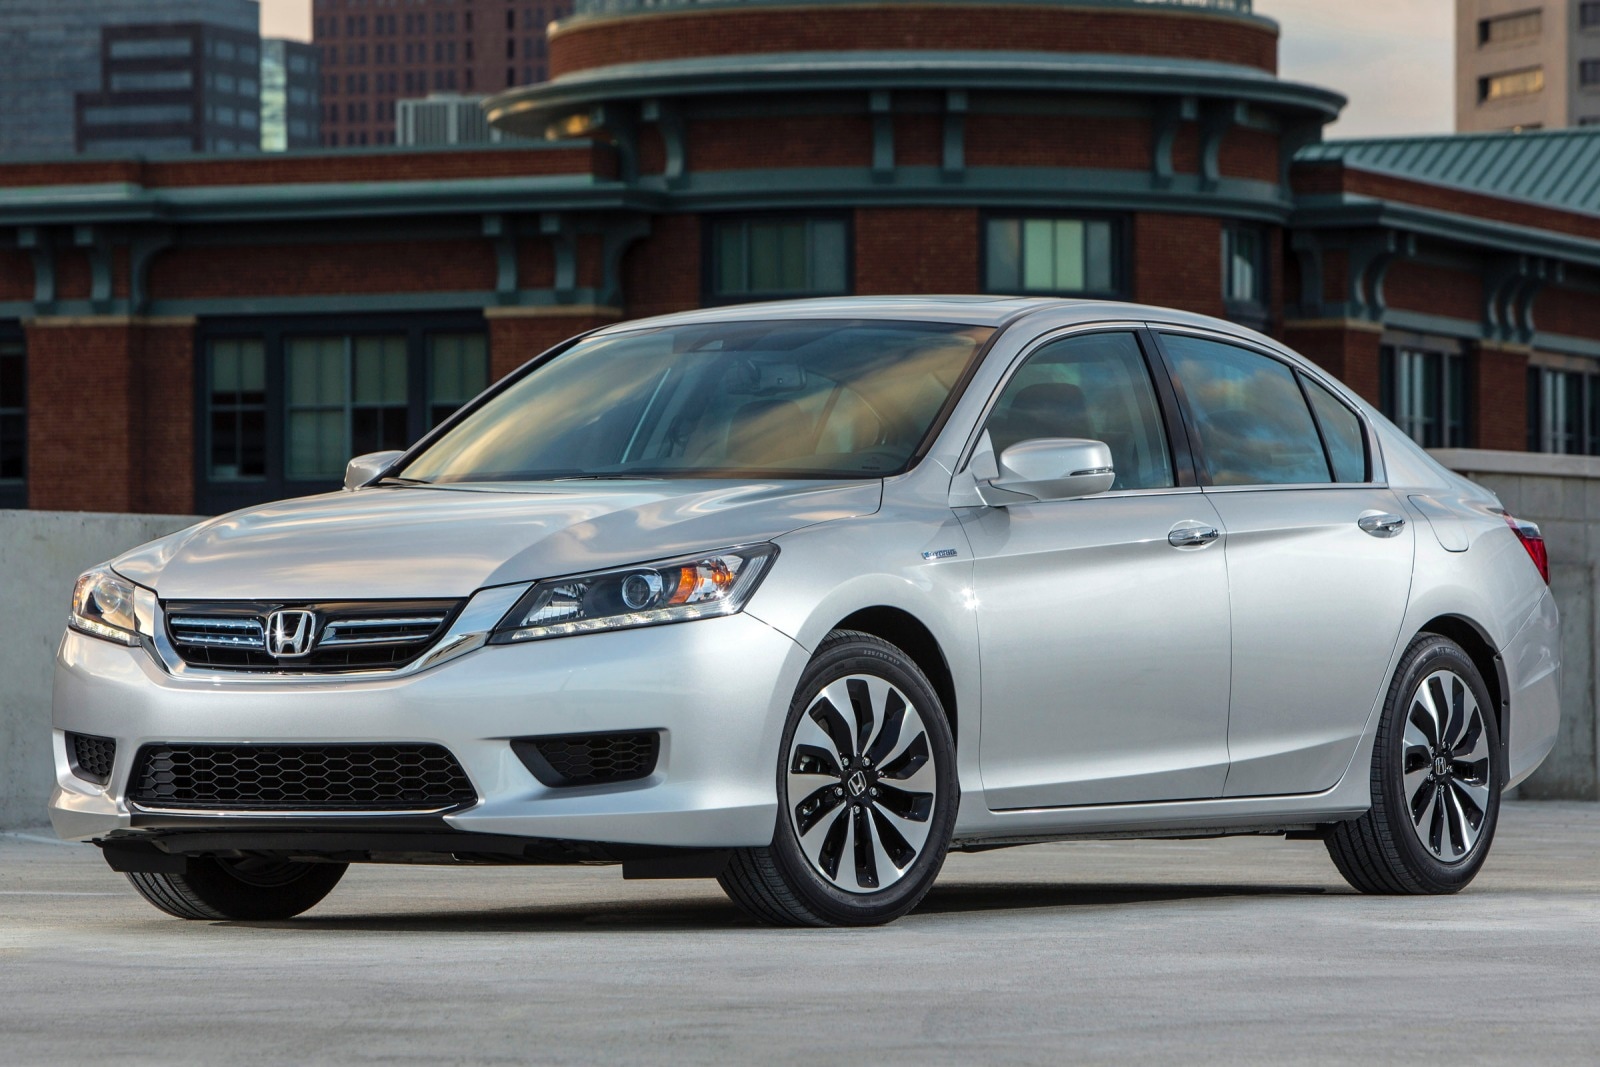 2015 Honda Accord Hybrid Review & Ratings | Edmunds